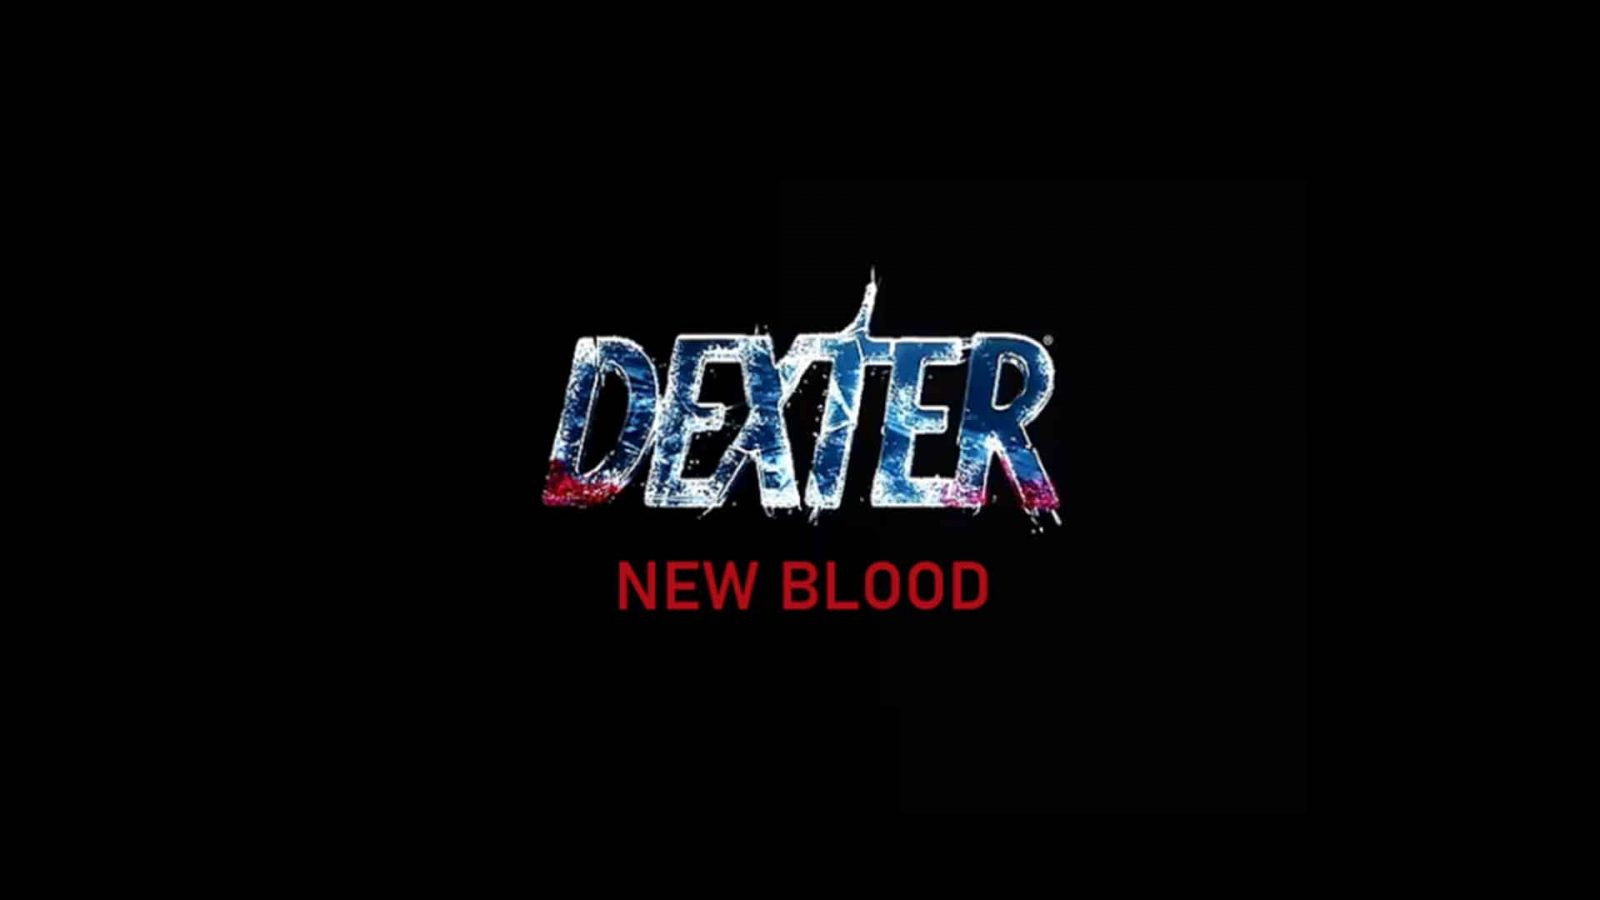 dexter new blood foto cast